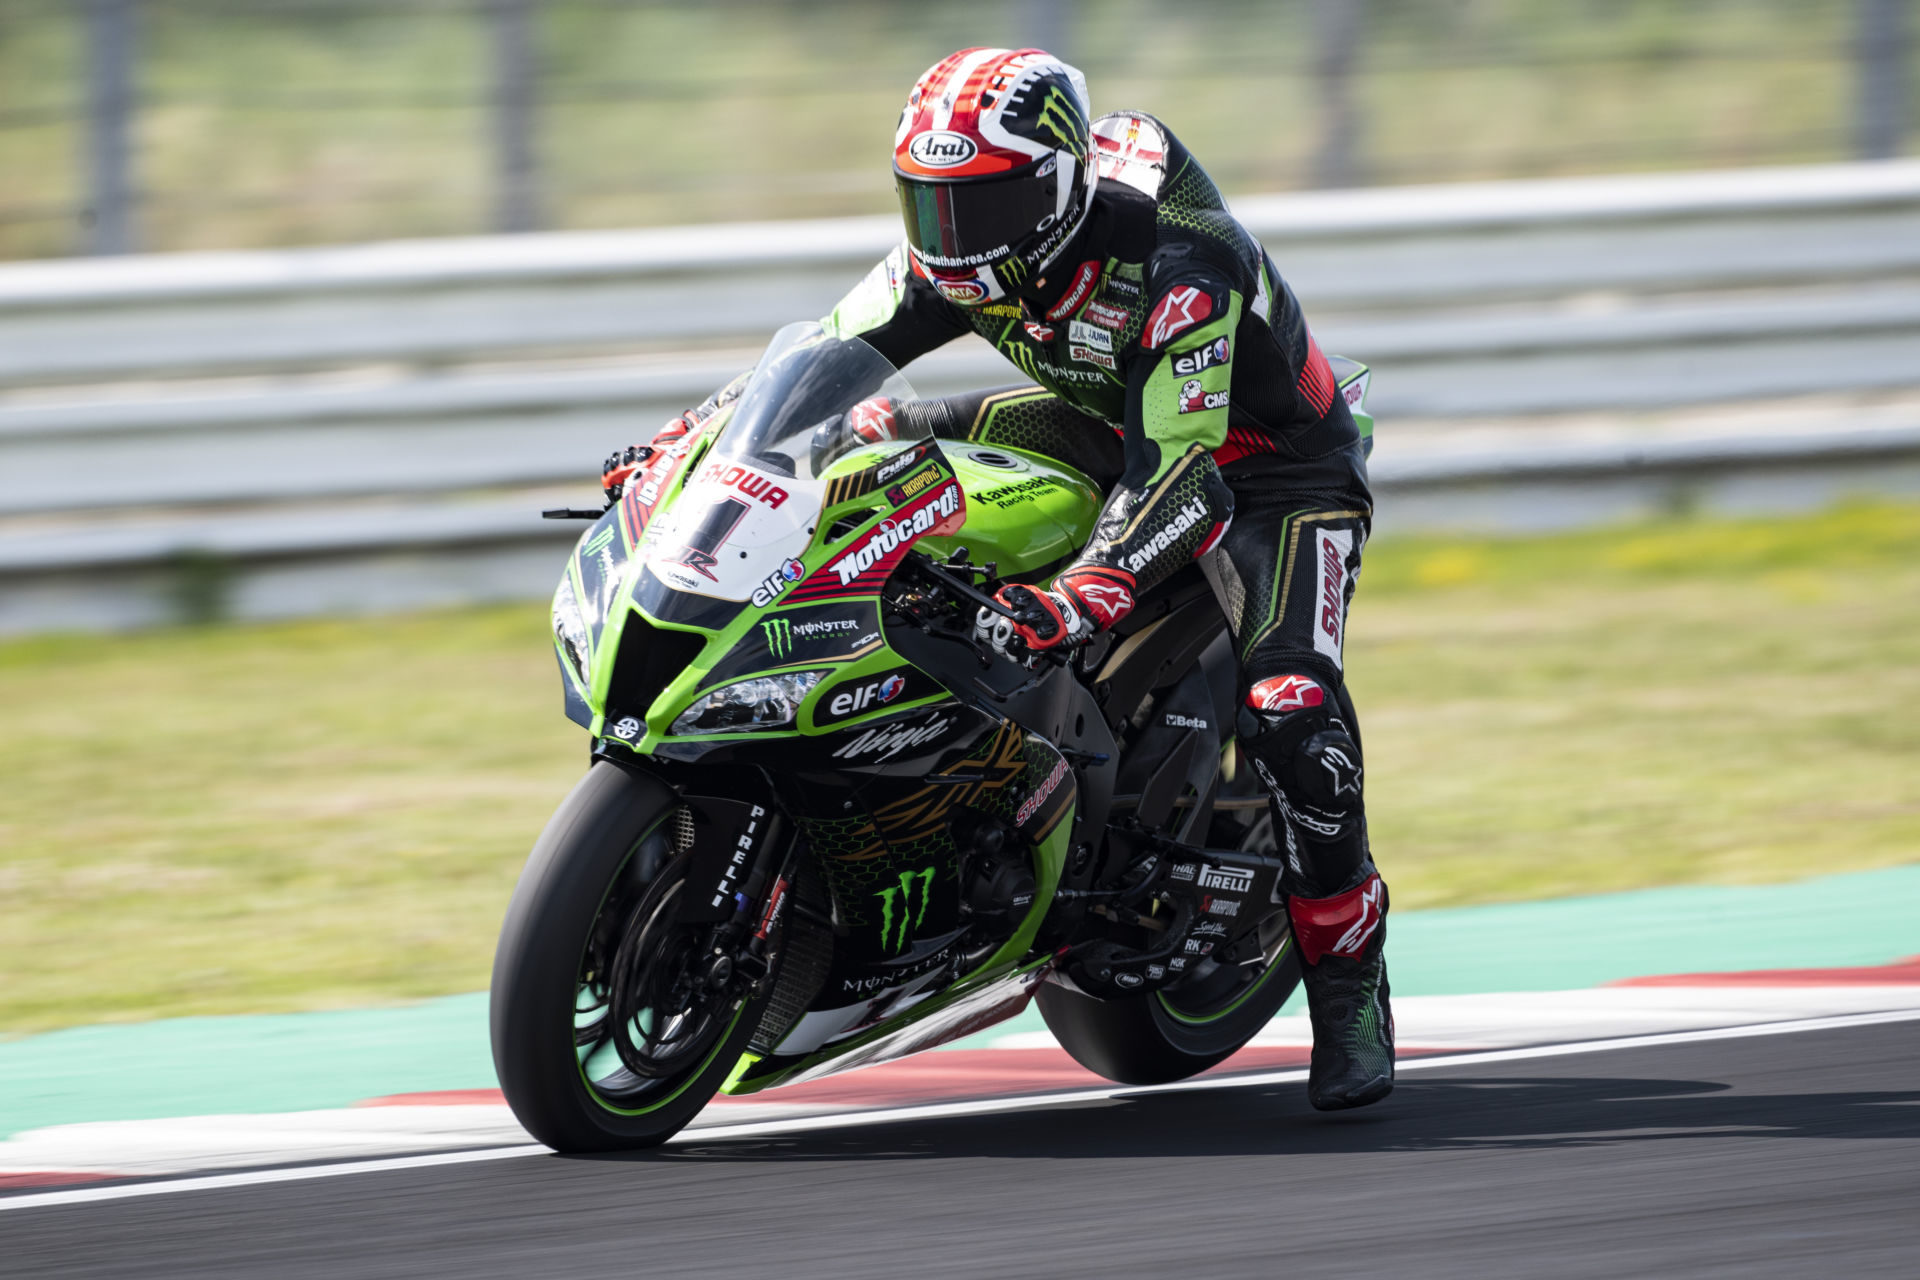 Jonathan Rea (1) at speed at Misano. Photo courtesy Kawasaki.